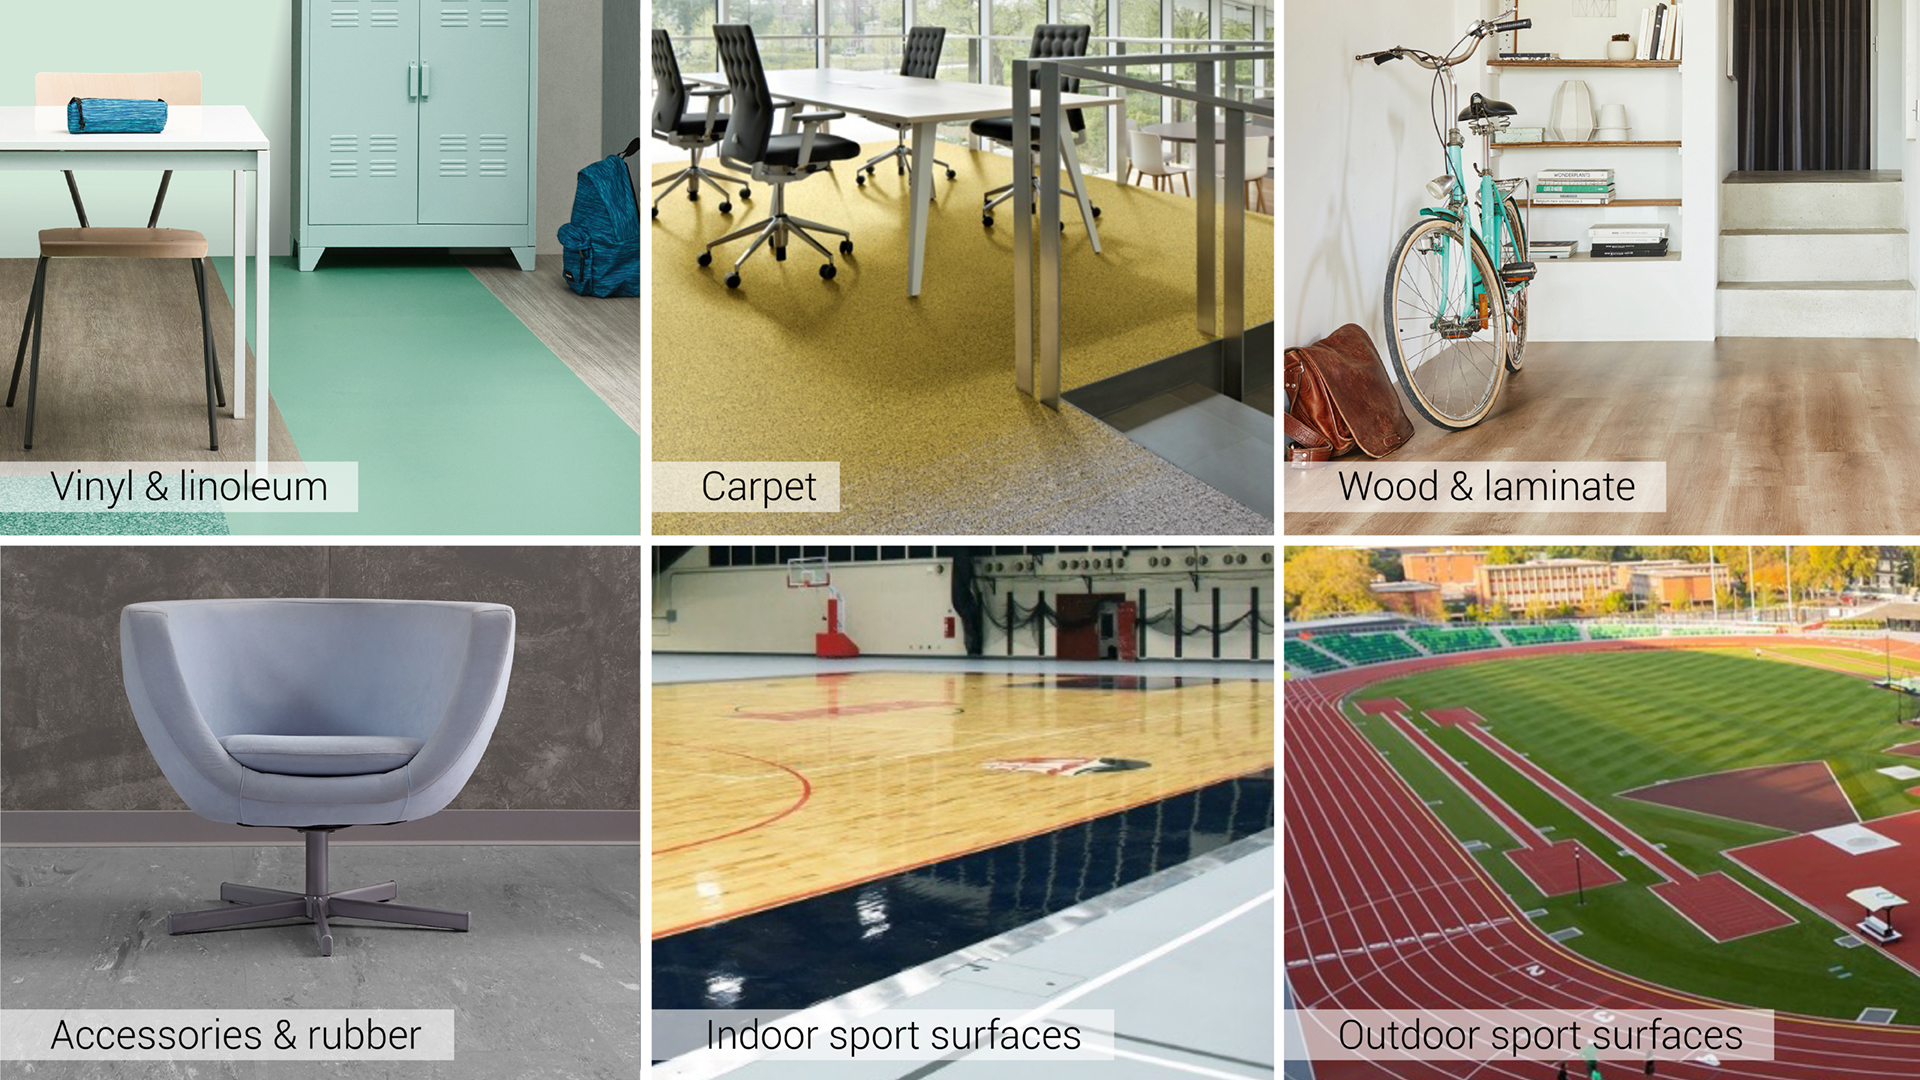 Tarkett offers a large portfolio of flooring solutions